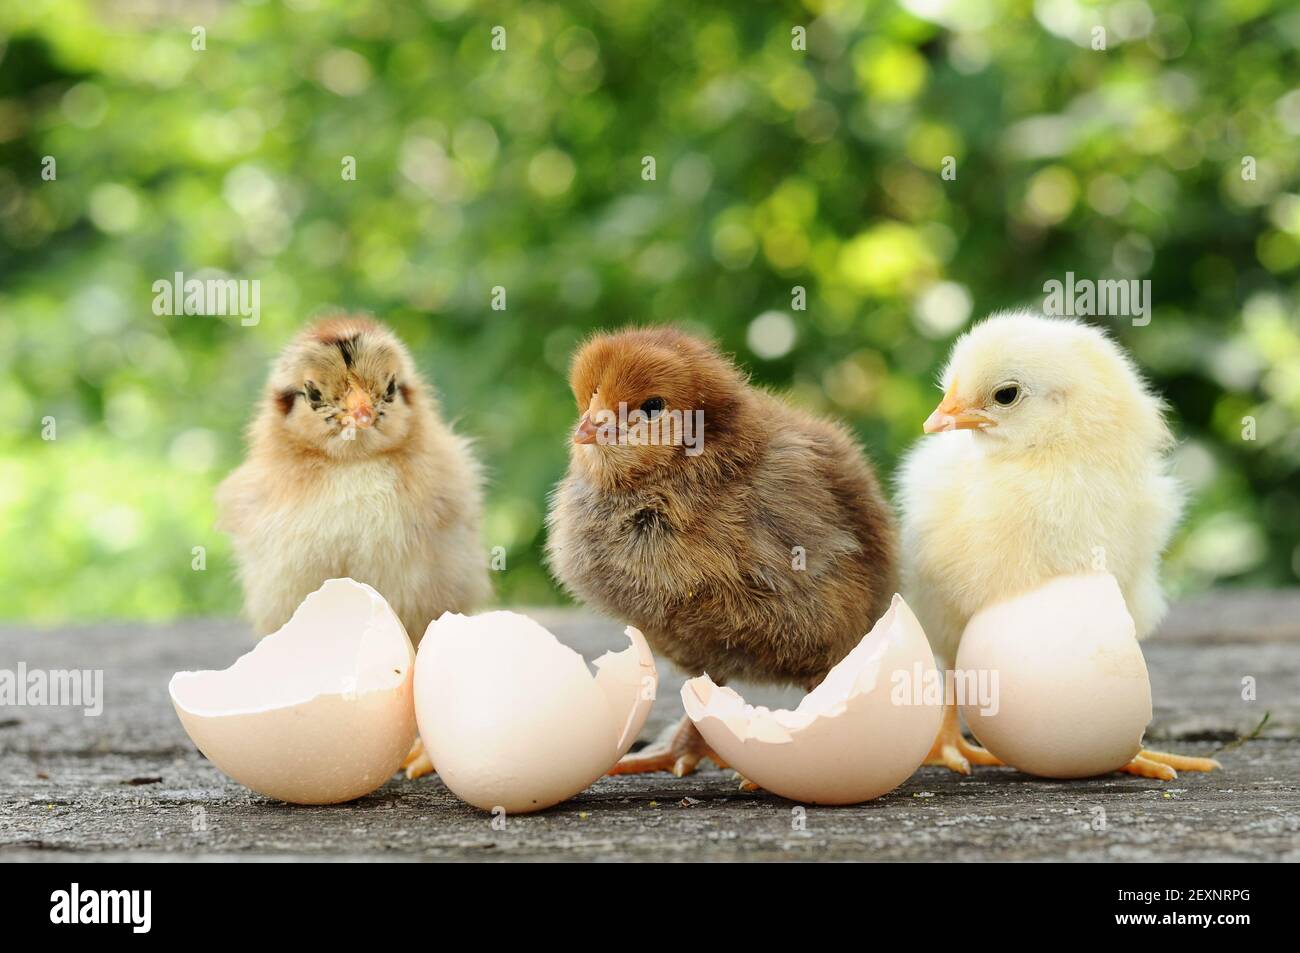 Small chicks and egg shells Stock Photo